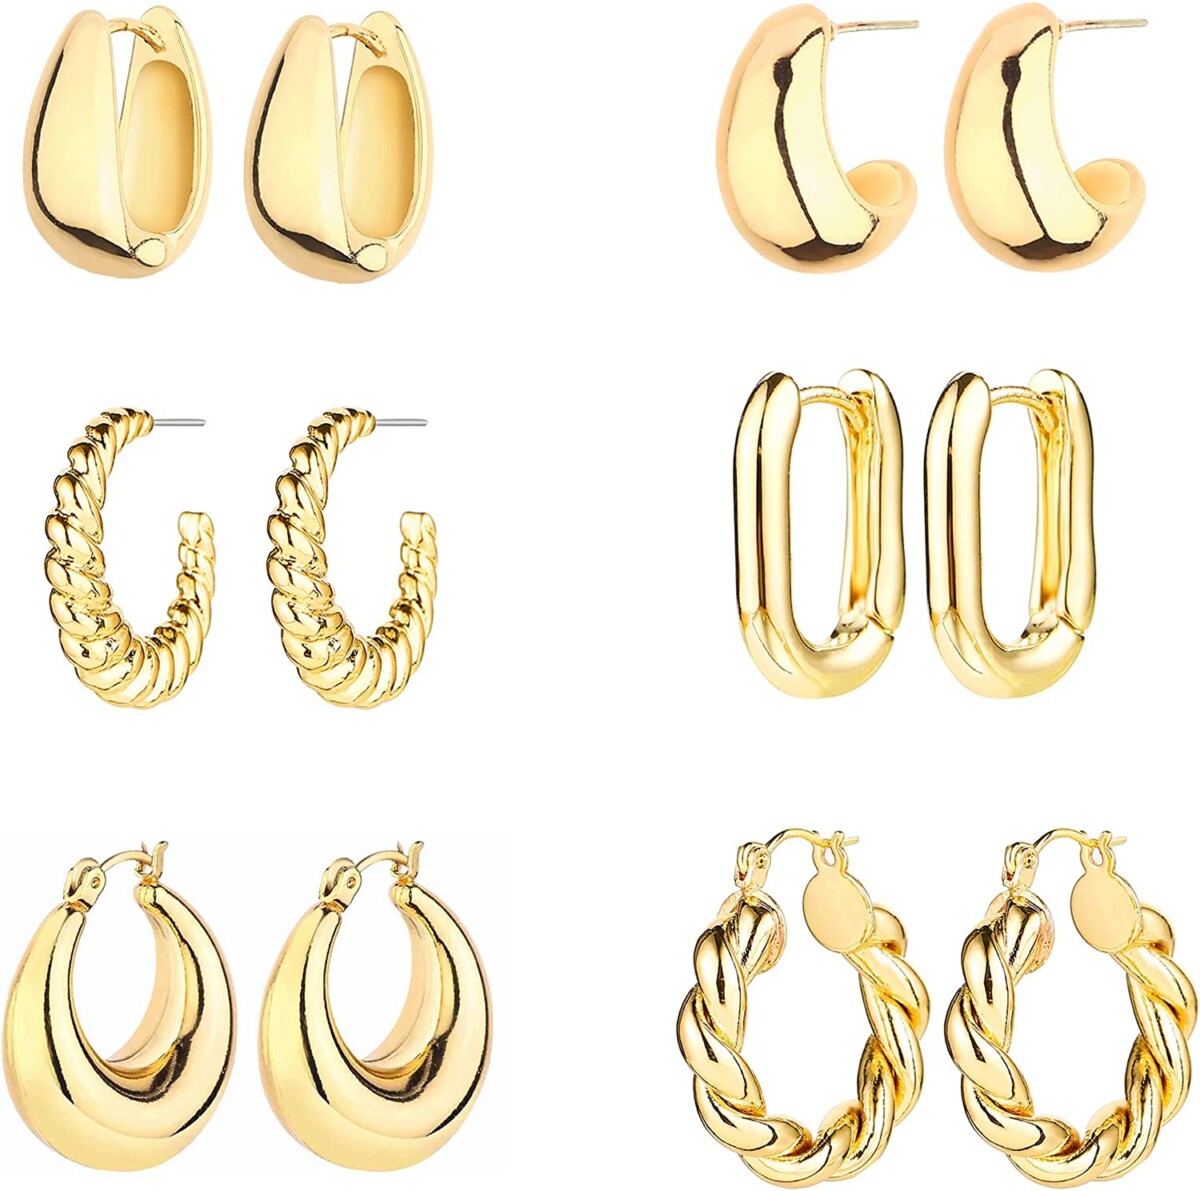 Alea's Deals {{50% OFF}} Six Pairs of 14K Gold Hoop Earrings  